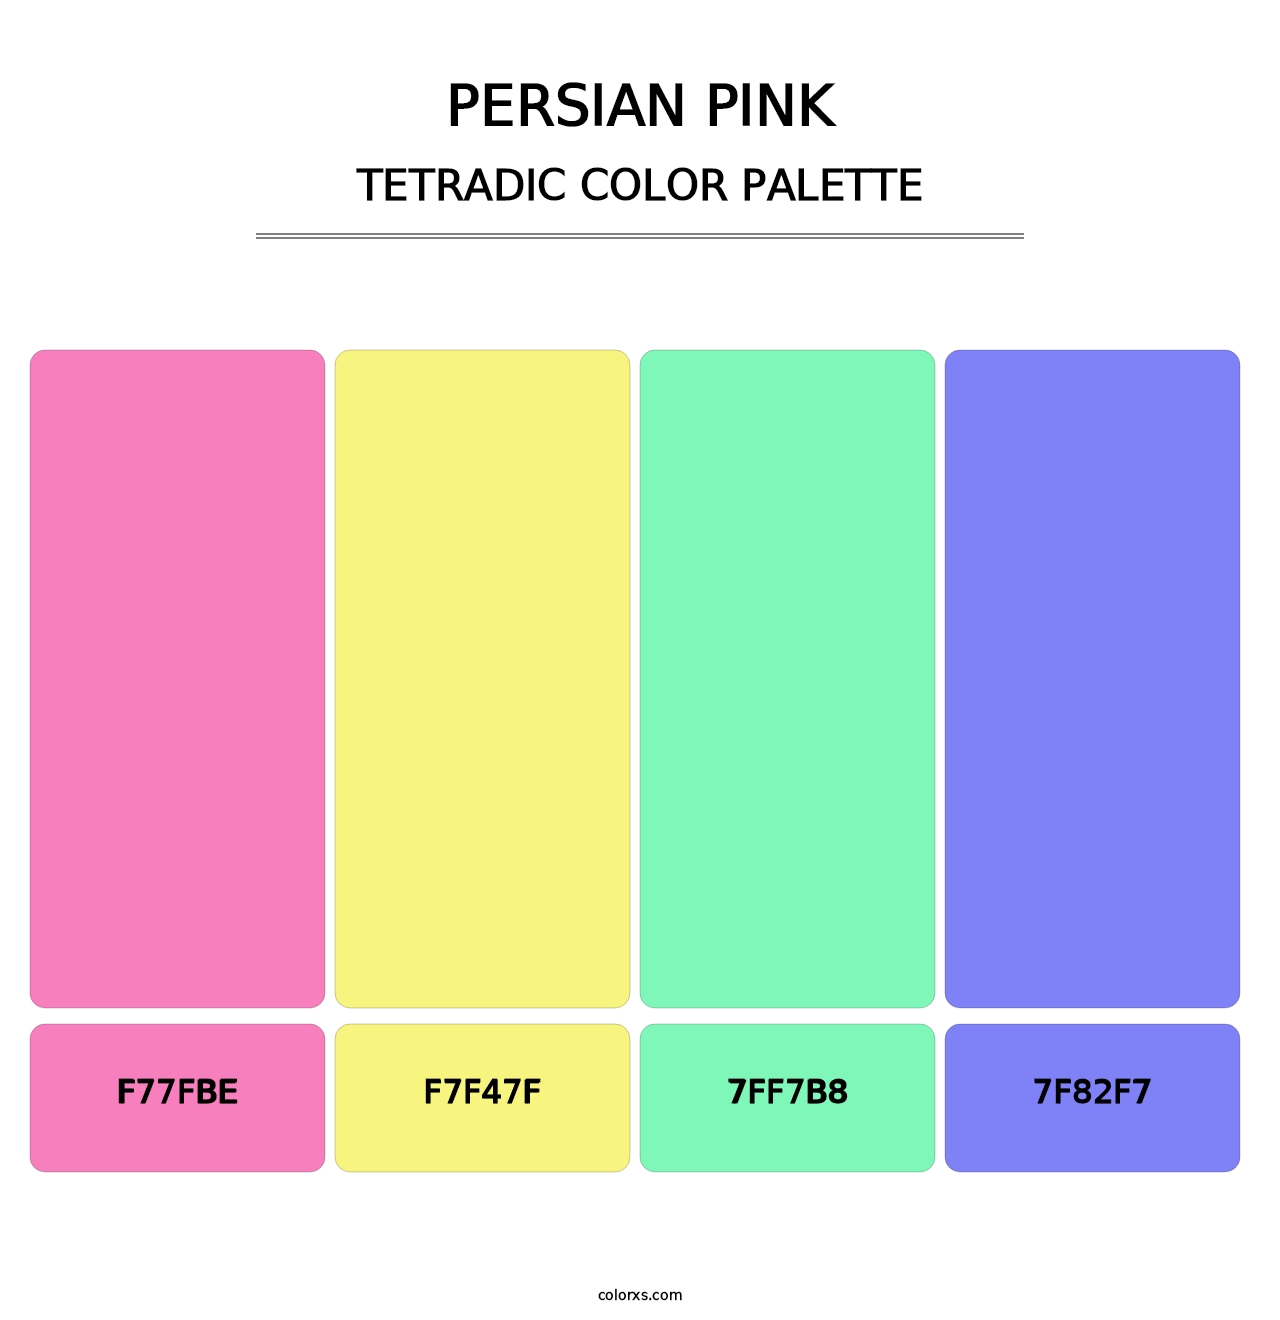 Persian Pink - Tetradic Color Palette